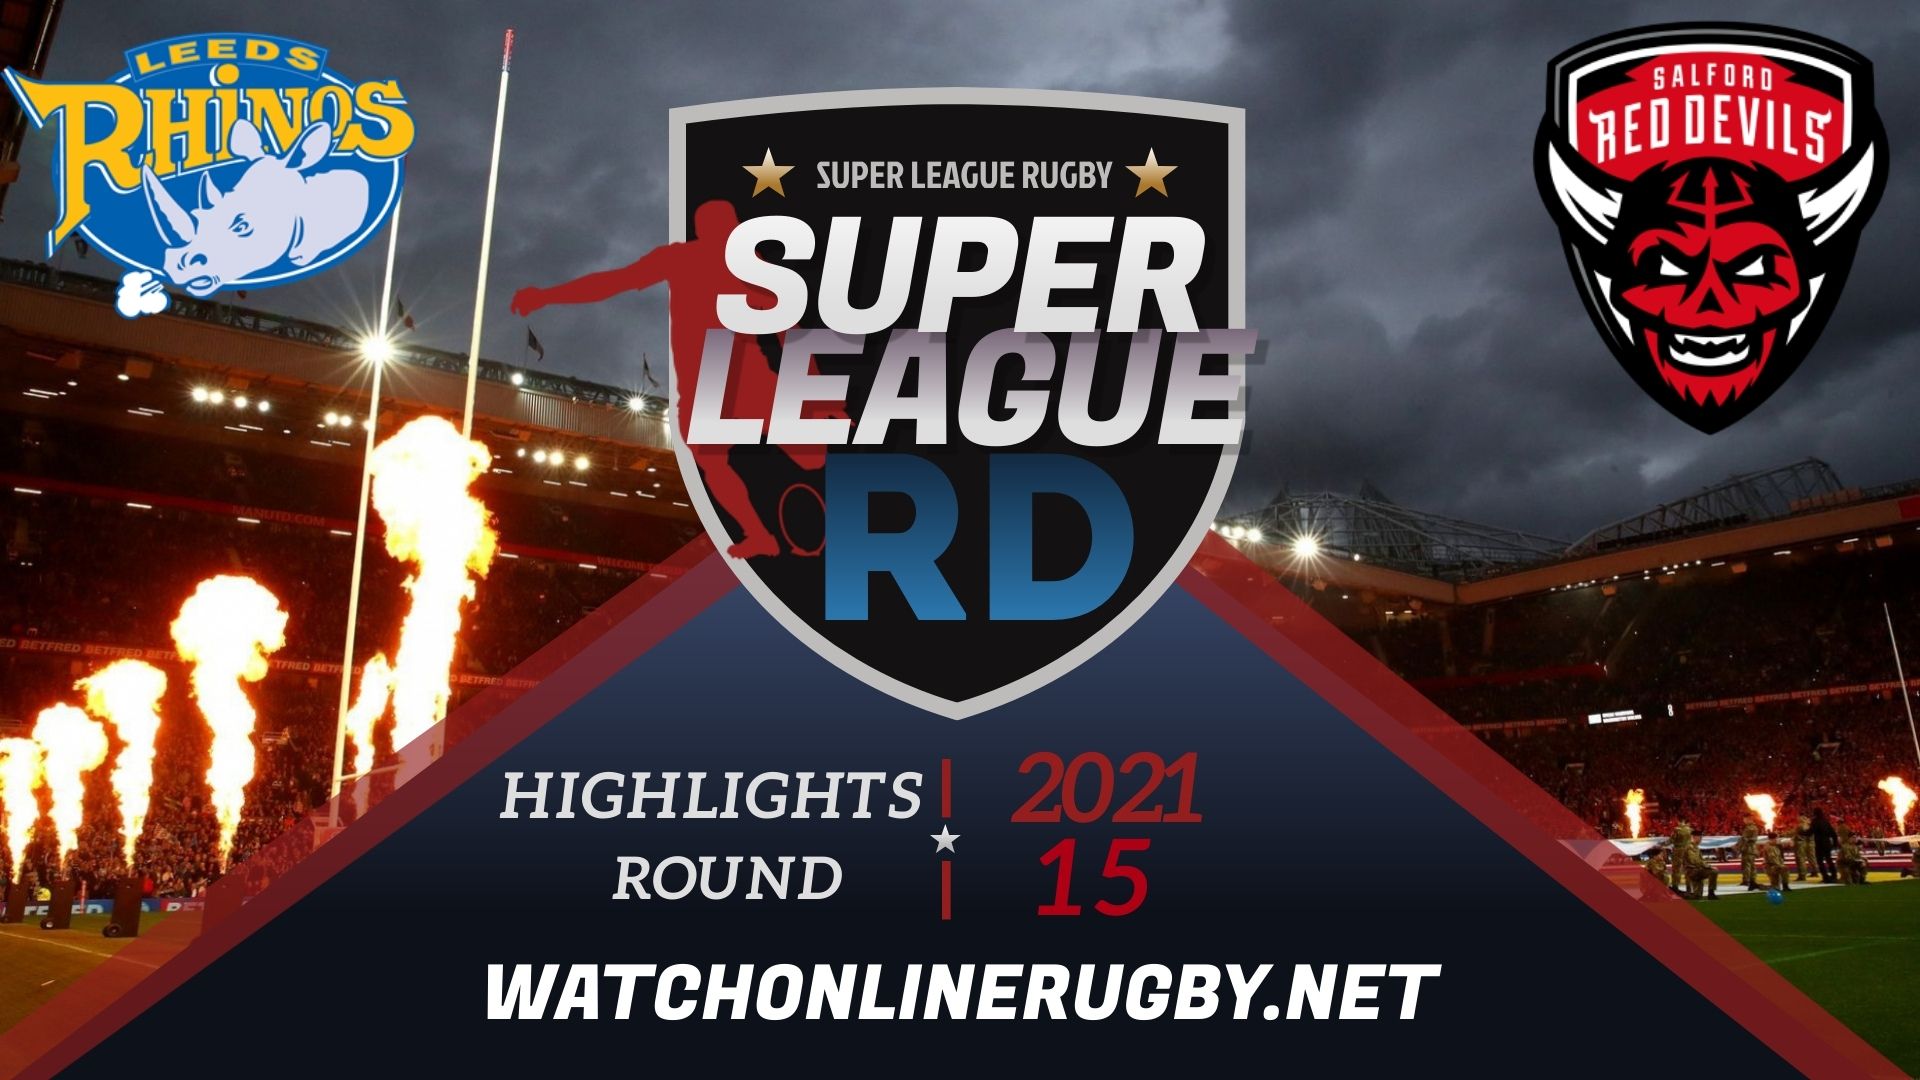 Leeds Rhinos Vs Salford Red Devils Super League Rugby 2021 RD 15